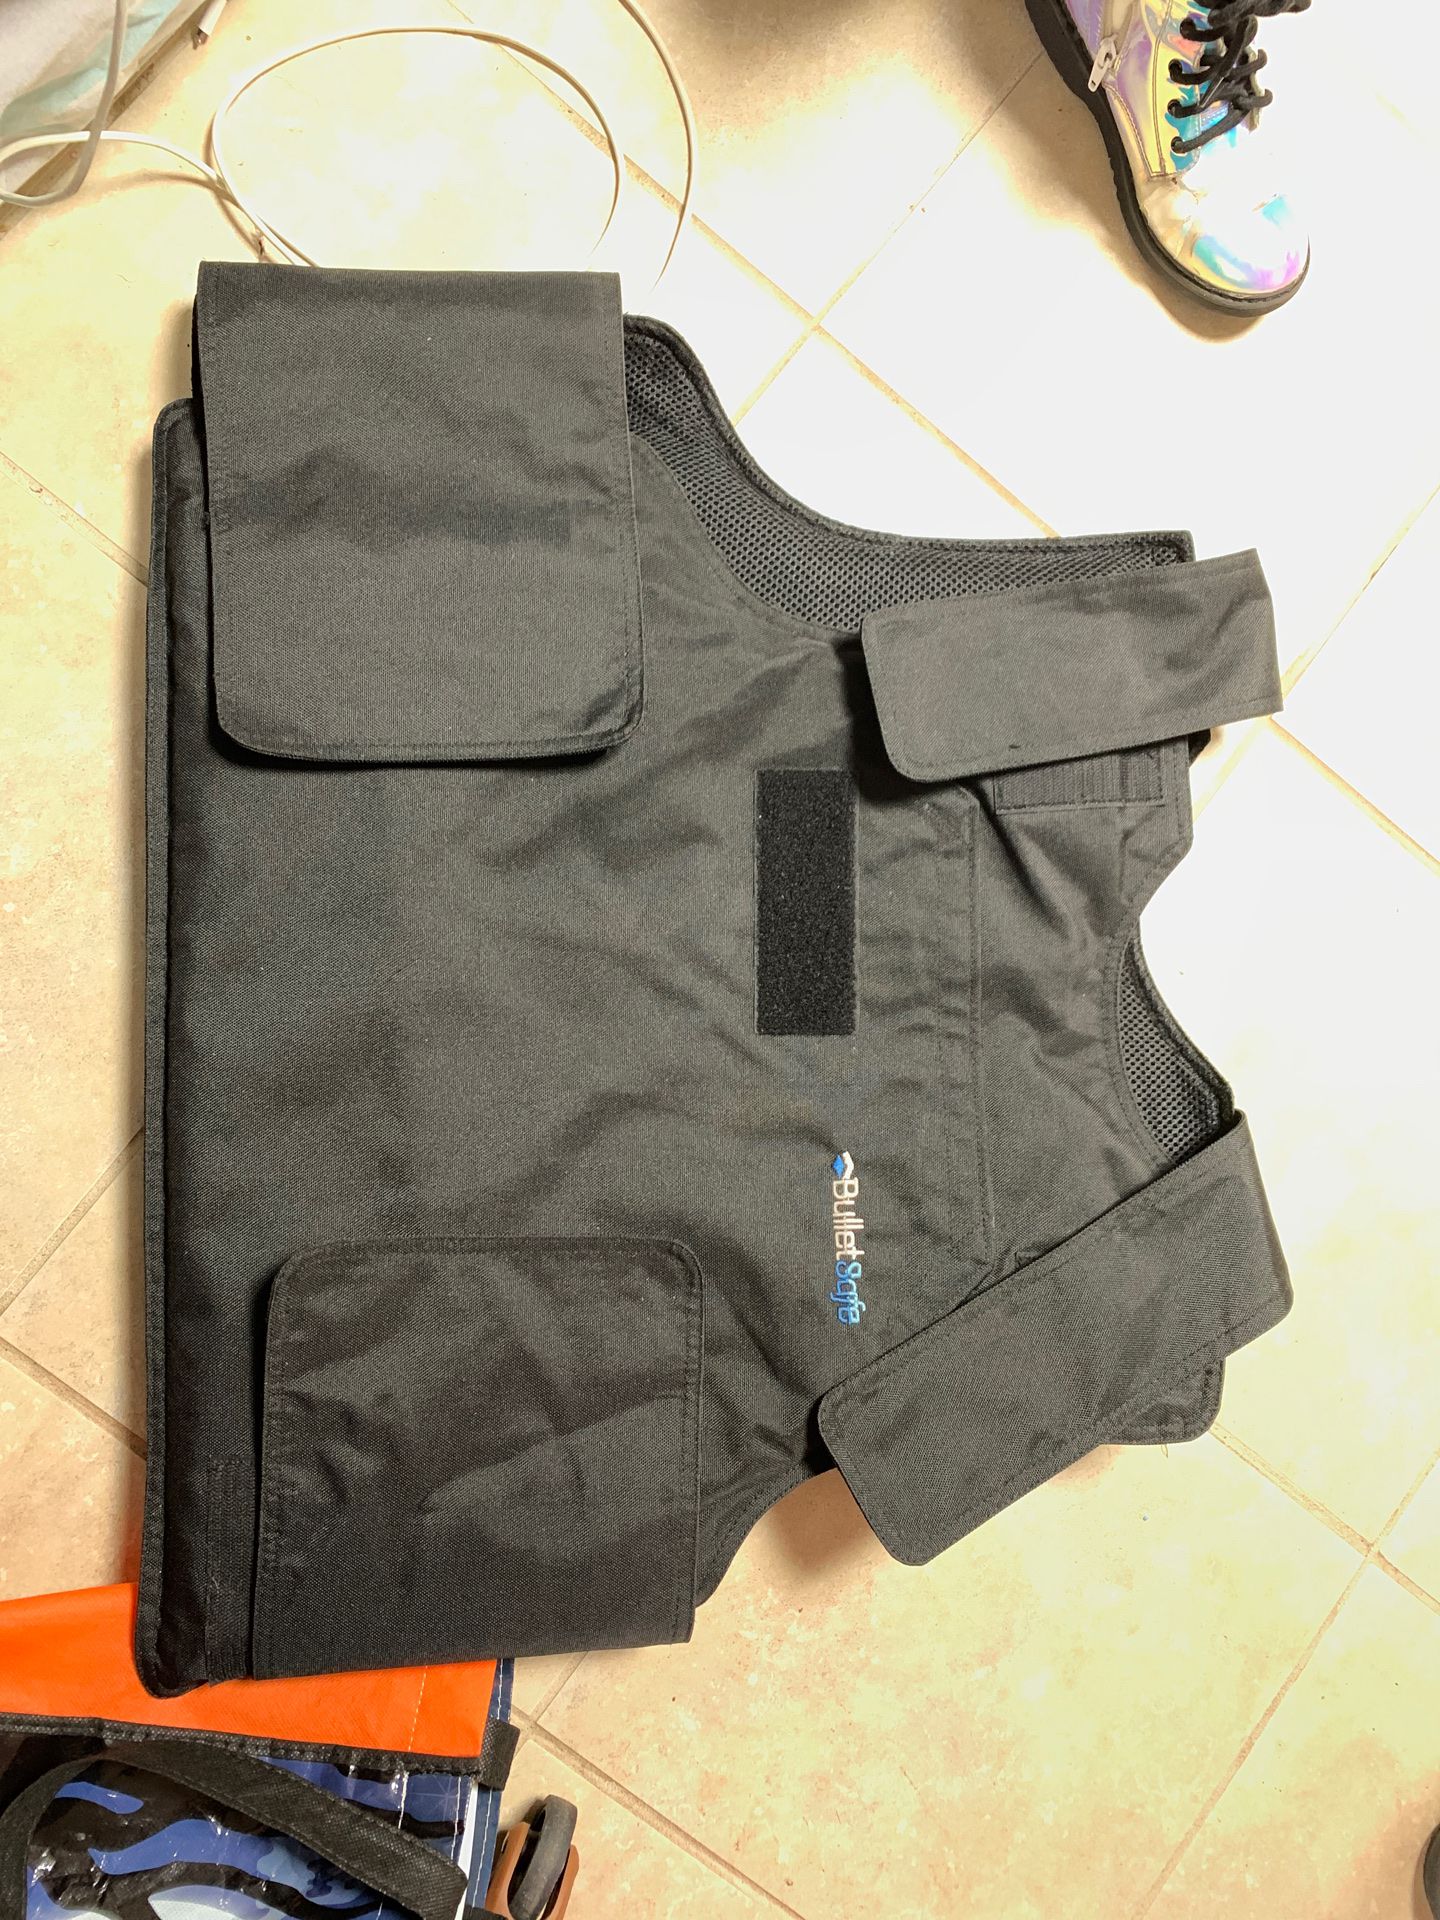 Bulletsafe Bullet proof vest! XL